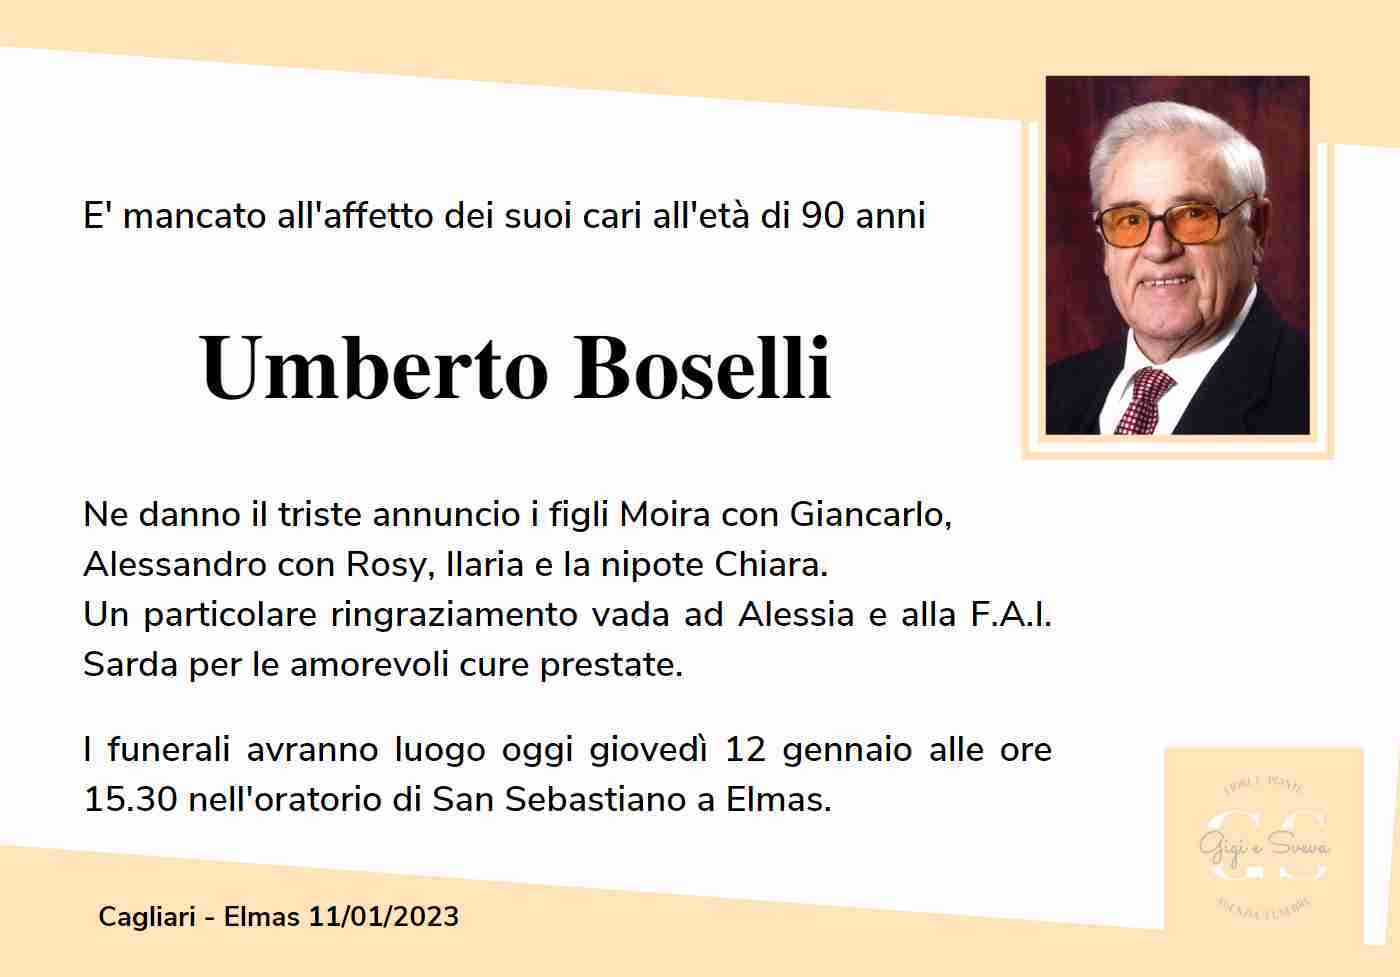 Umberto Boselli